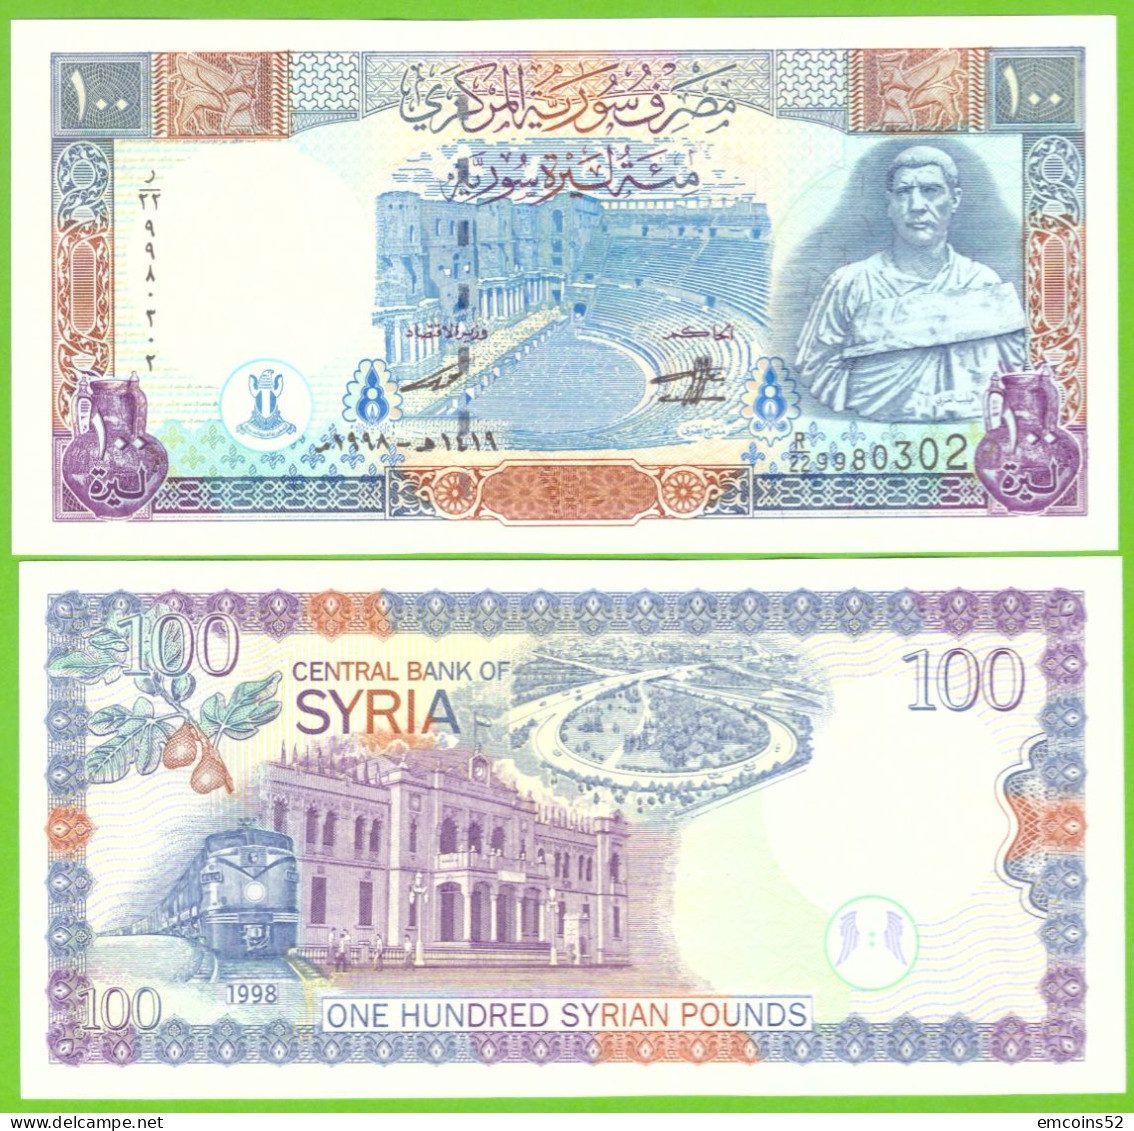 SYRIA 100 POUNDS 1998 P-108 UNC - Syrien